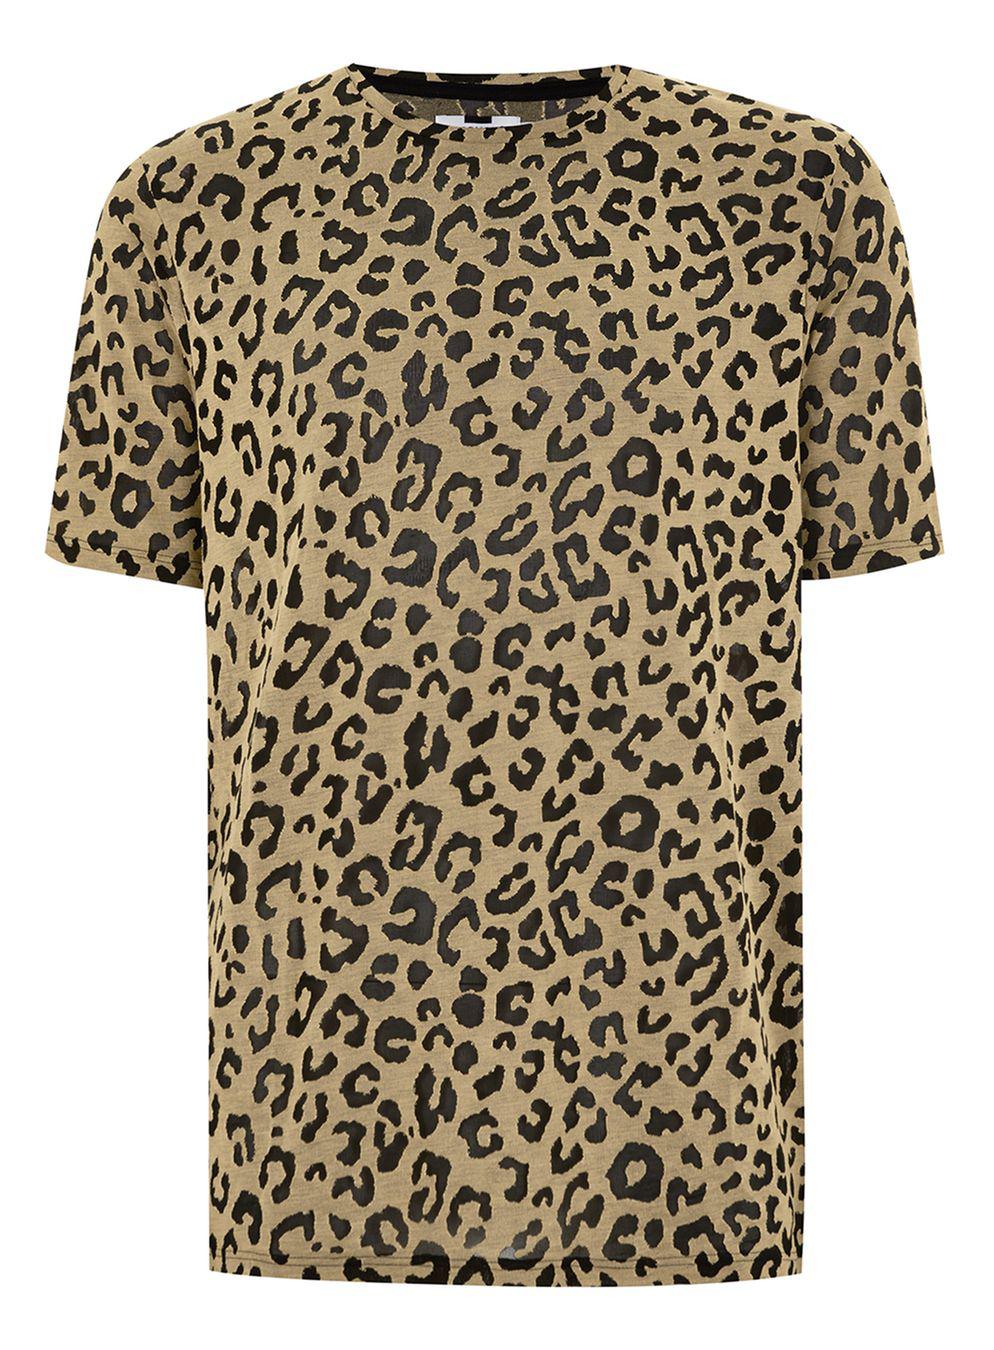 Lyst - Topman Leopard Print Mesh T-shirt in Brown for Men